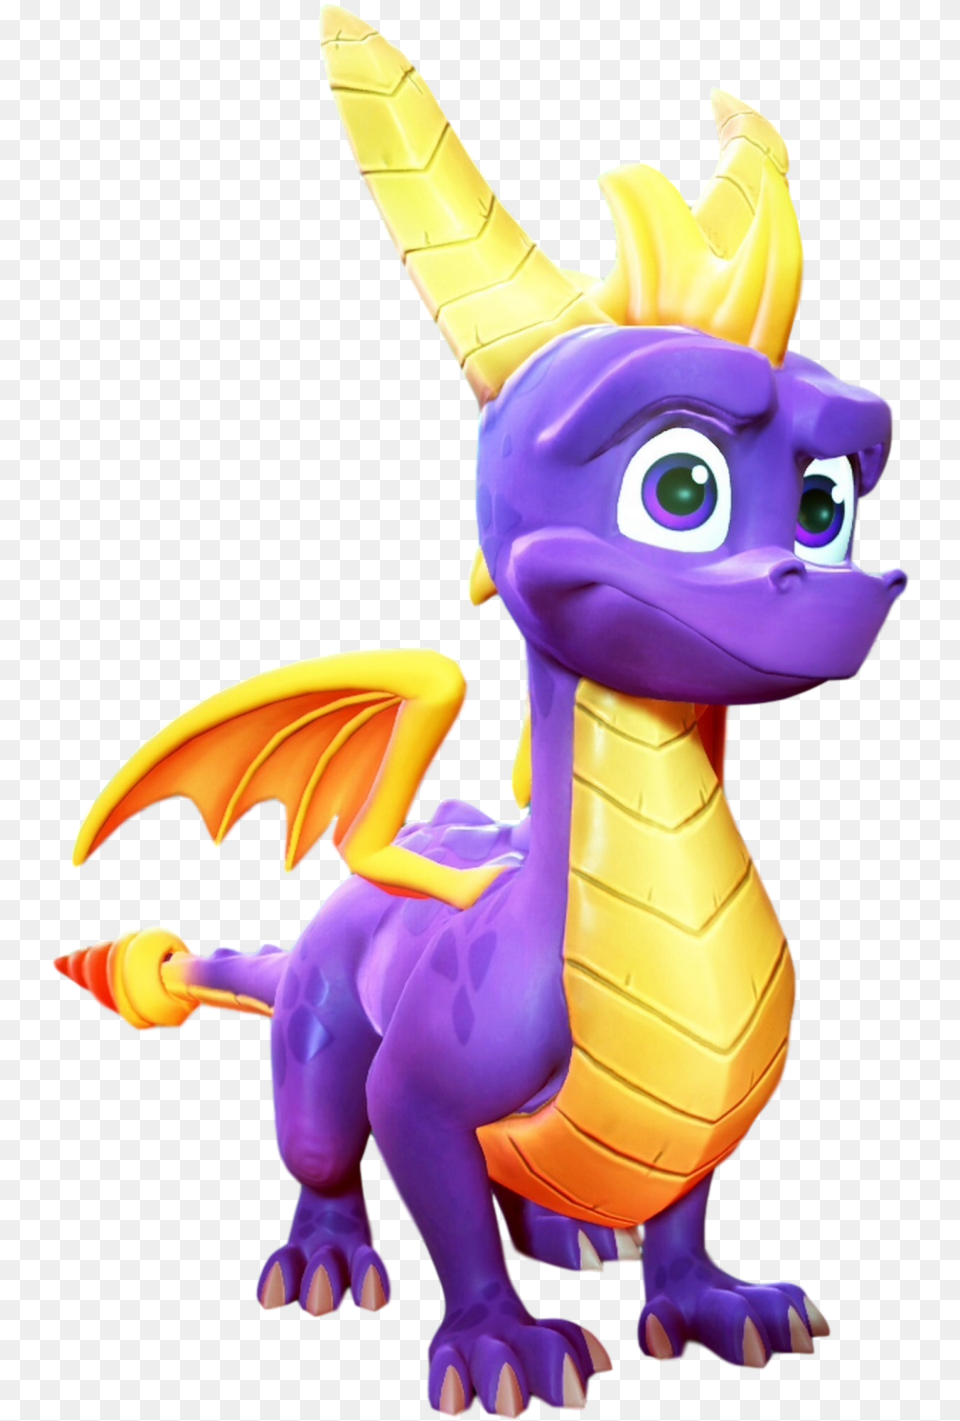 Spyro The Dragon Spyro The Dragon 2018, Purple, Toy Png Image